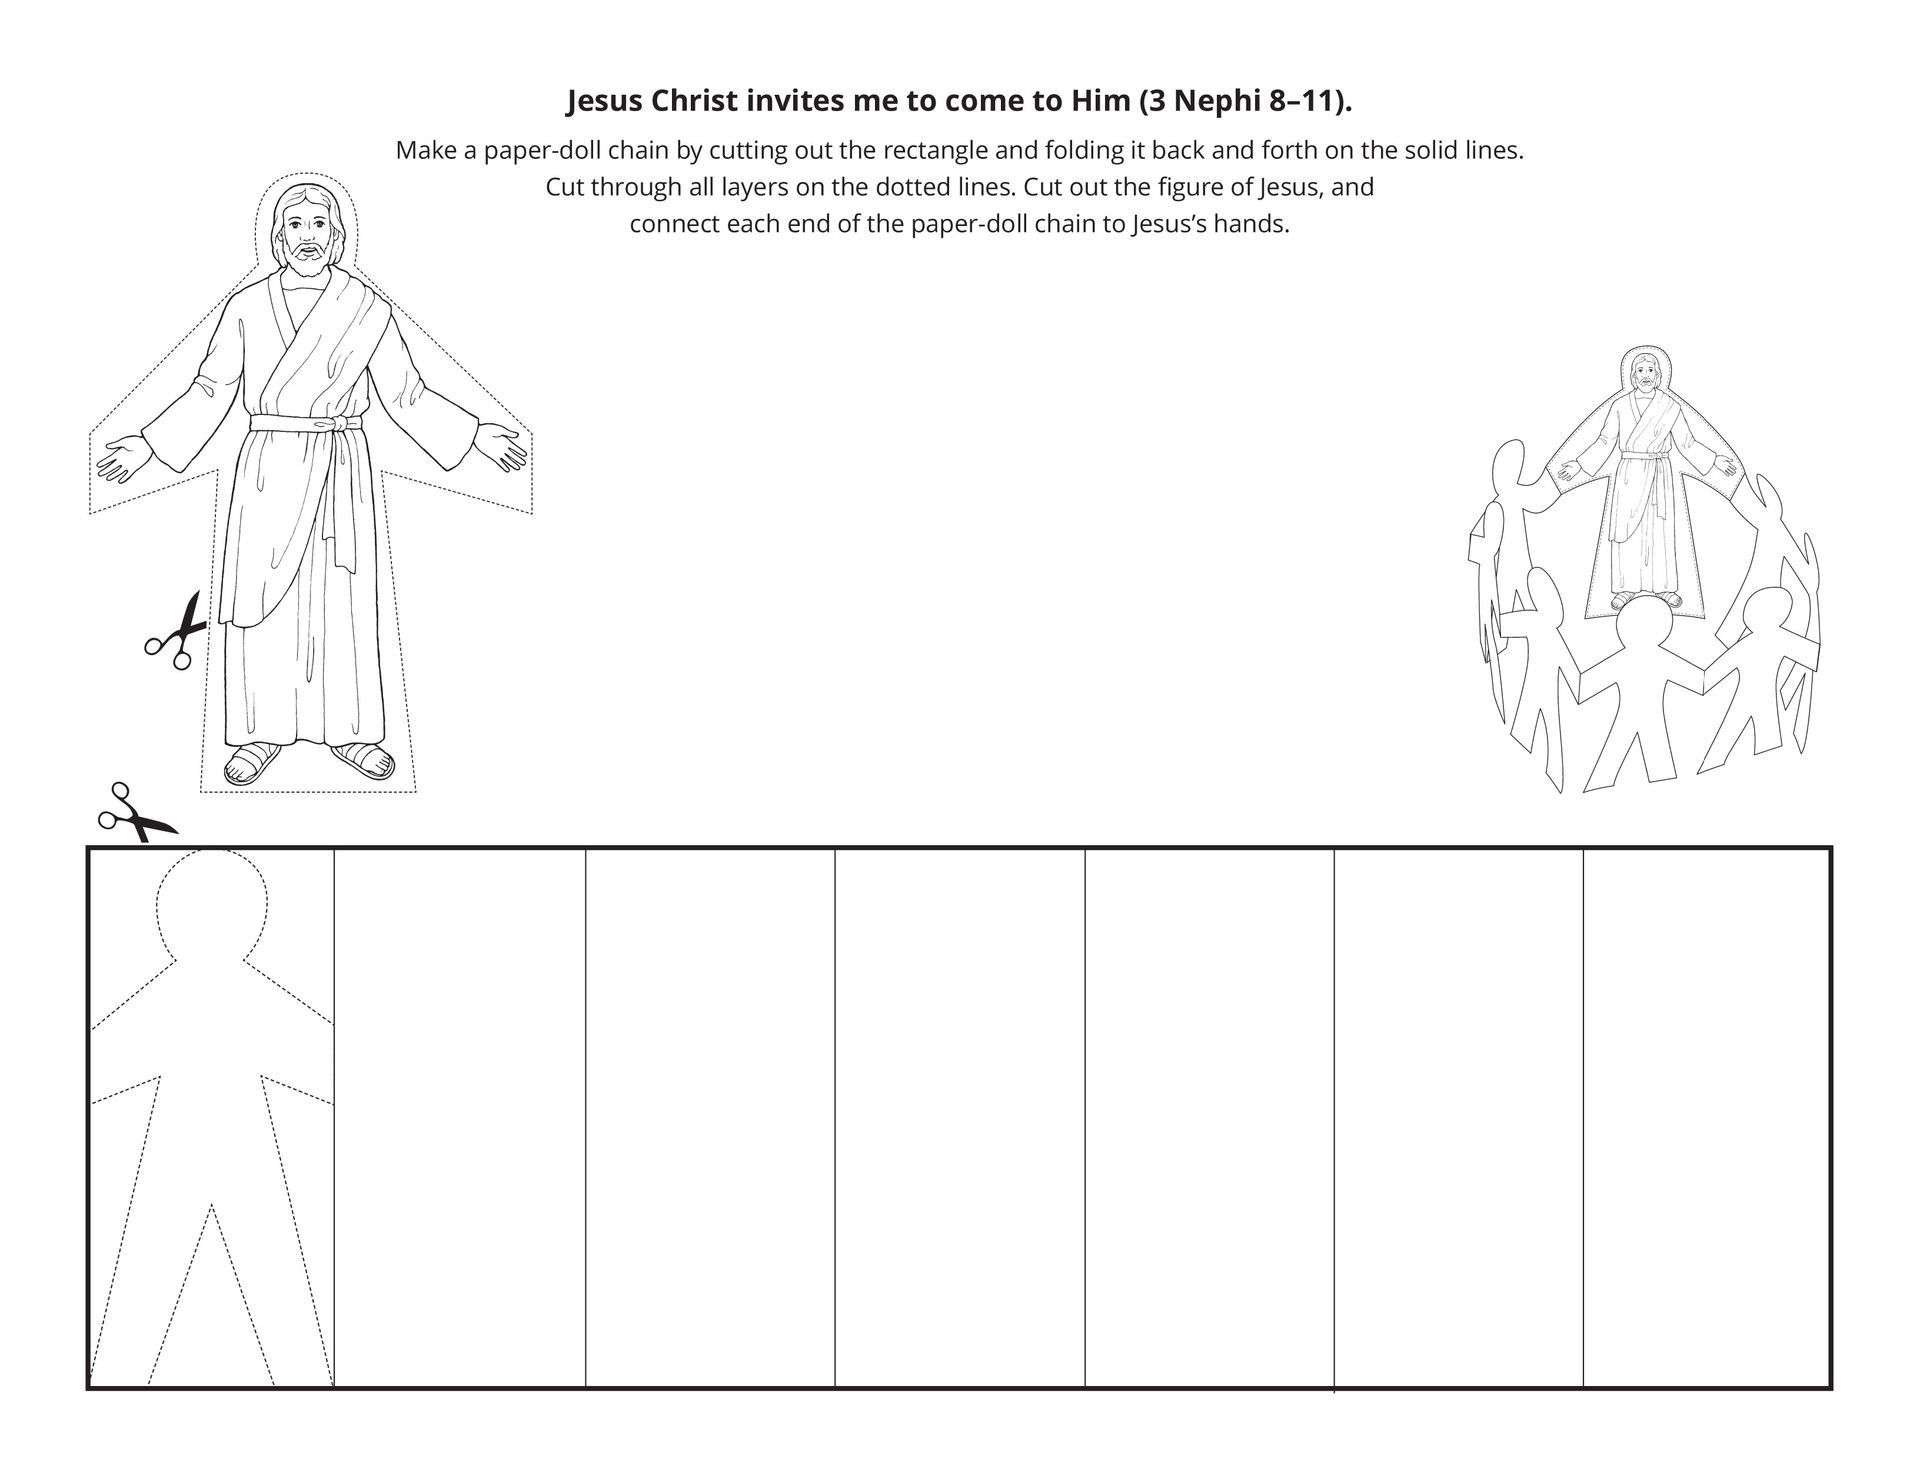 A paper cutout activity depicting Christ’s invitation to come unto Him.